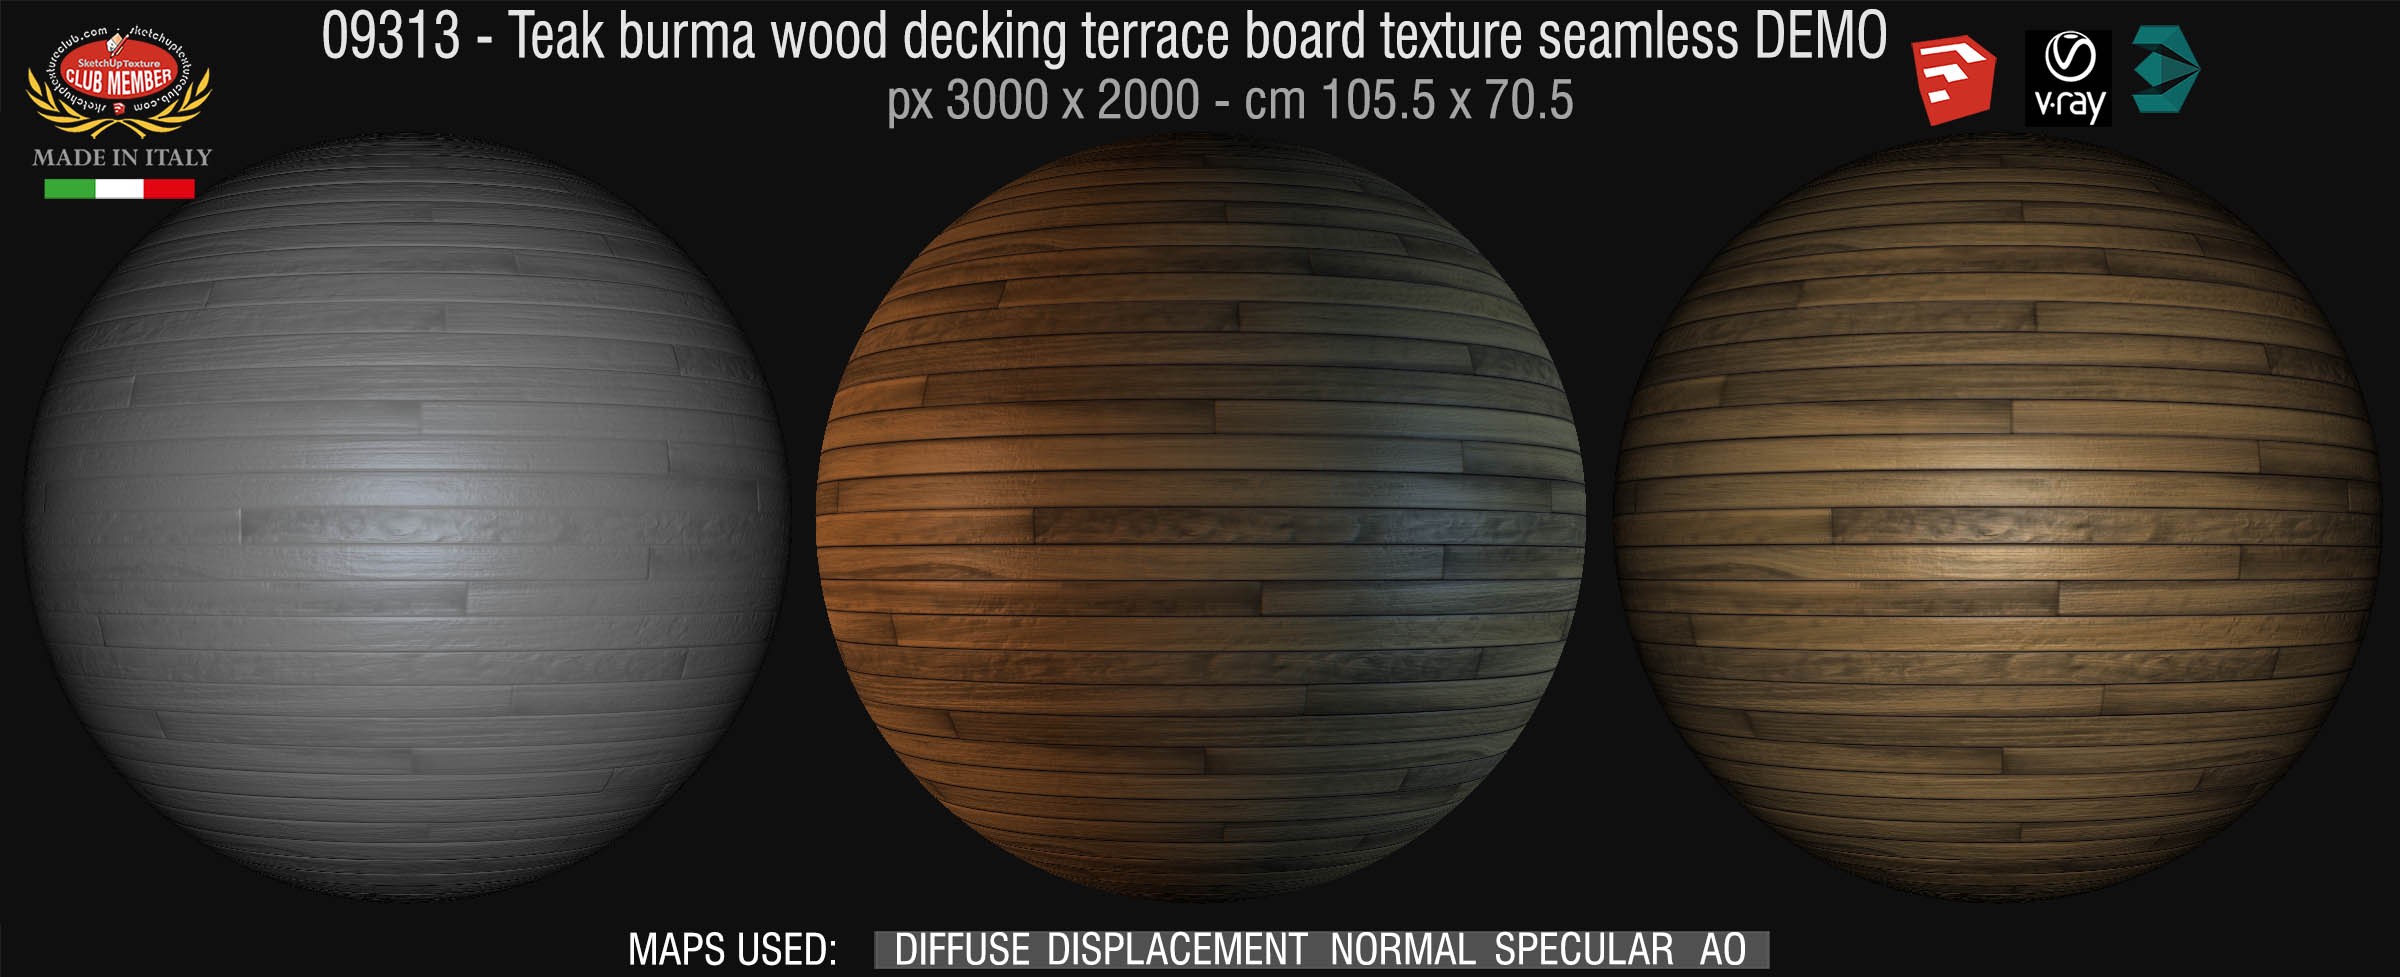 09313 HR Teak burma wood decking terrace board texture seamless + maps DEMO